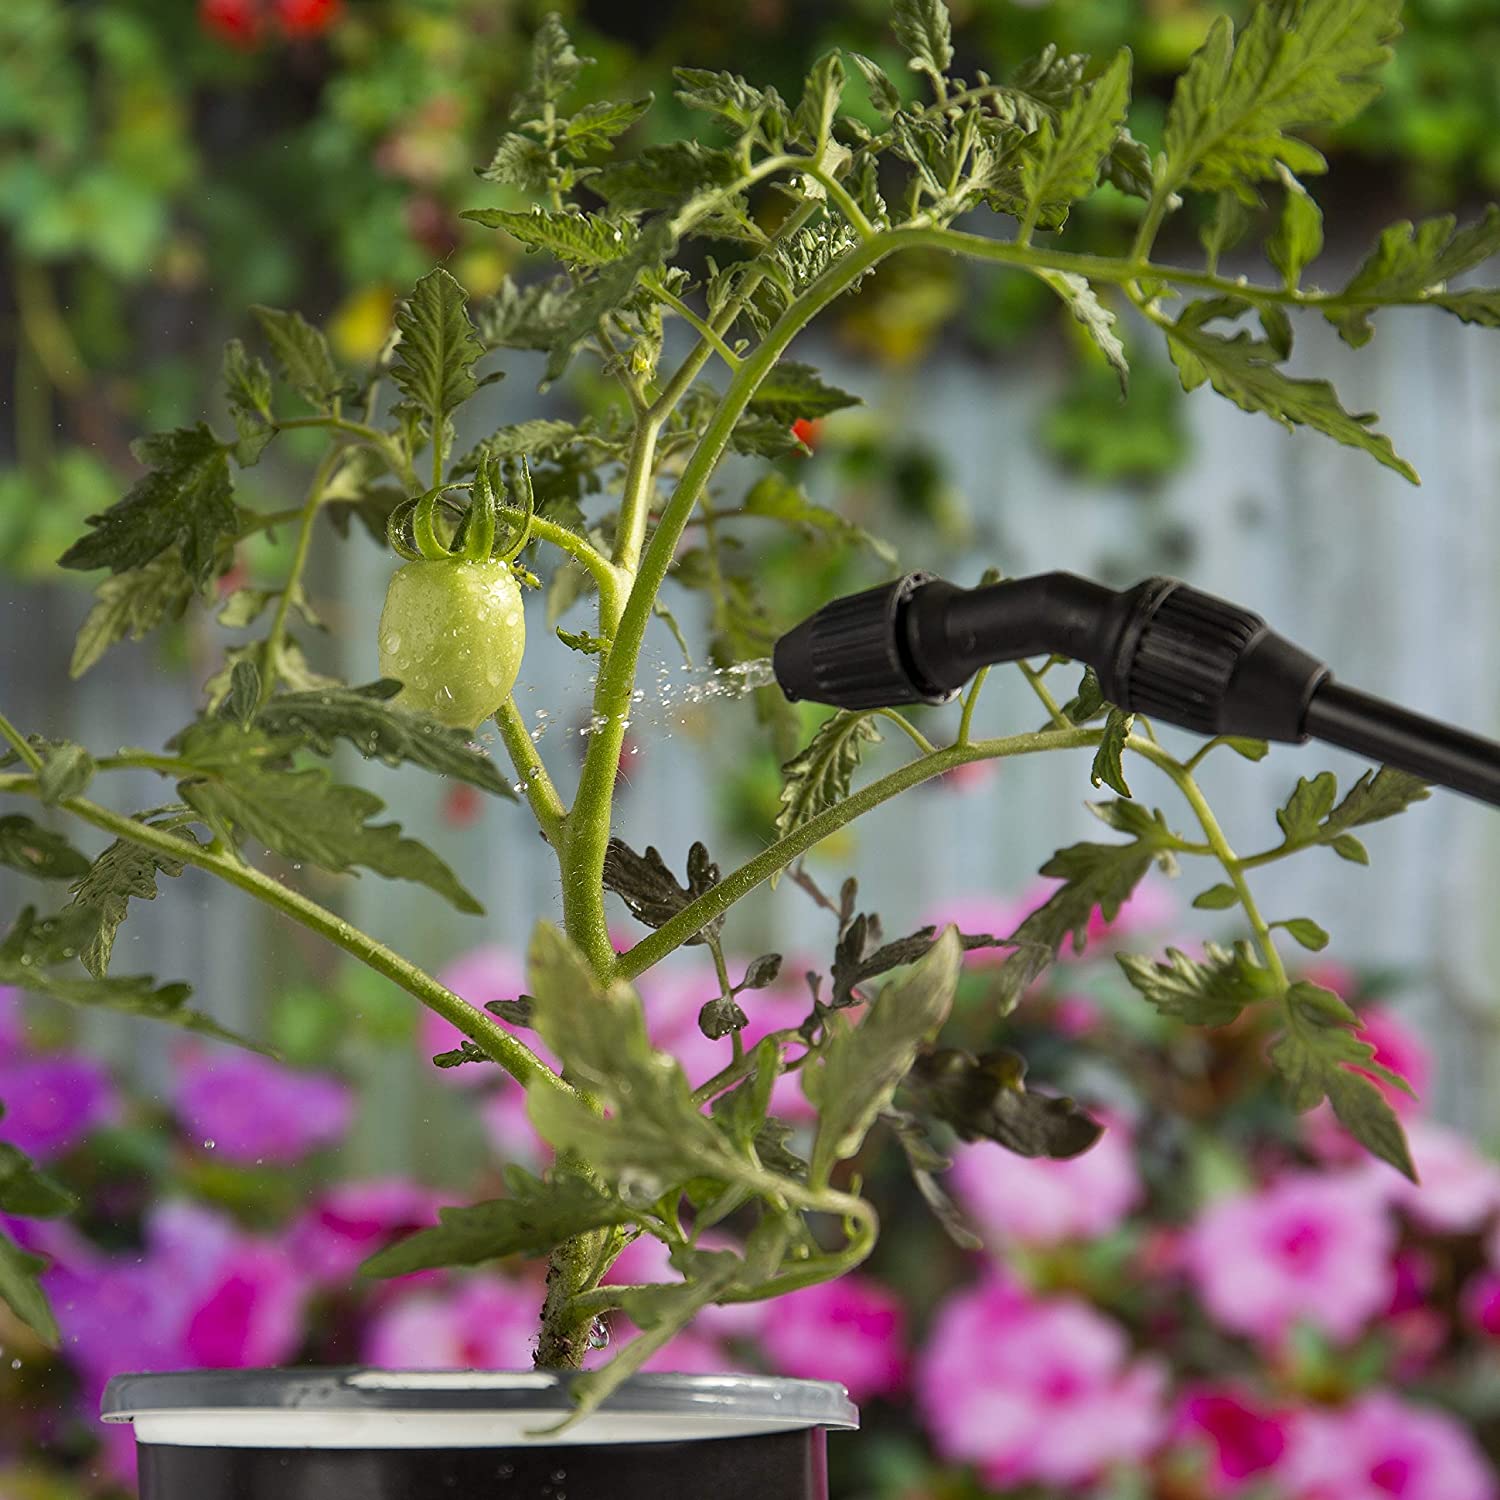 Garden Safe - Worm & Caterpillar Killer